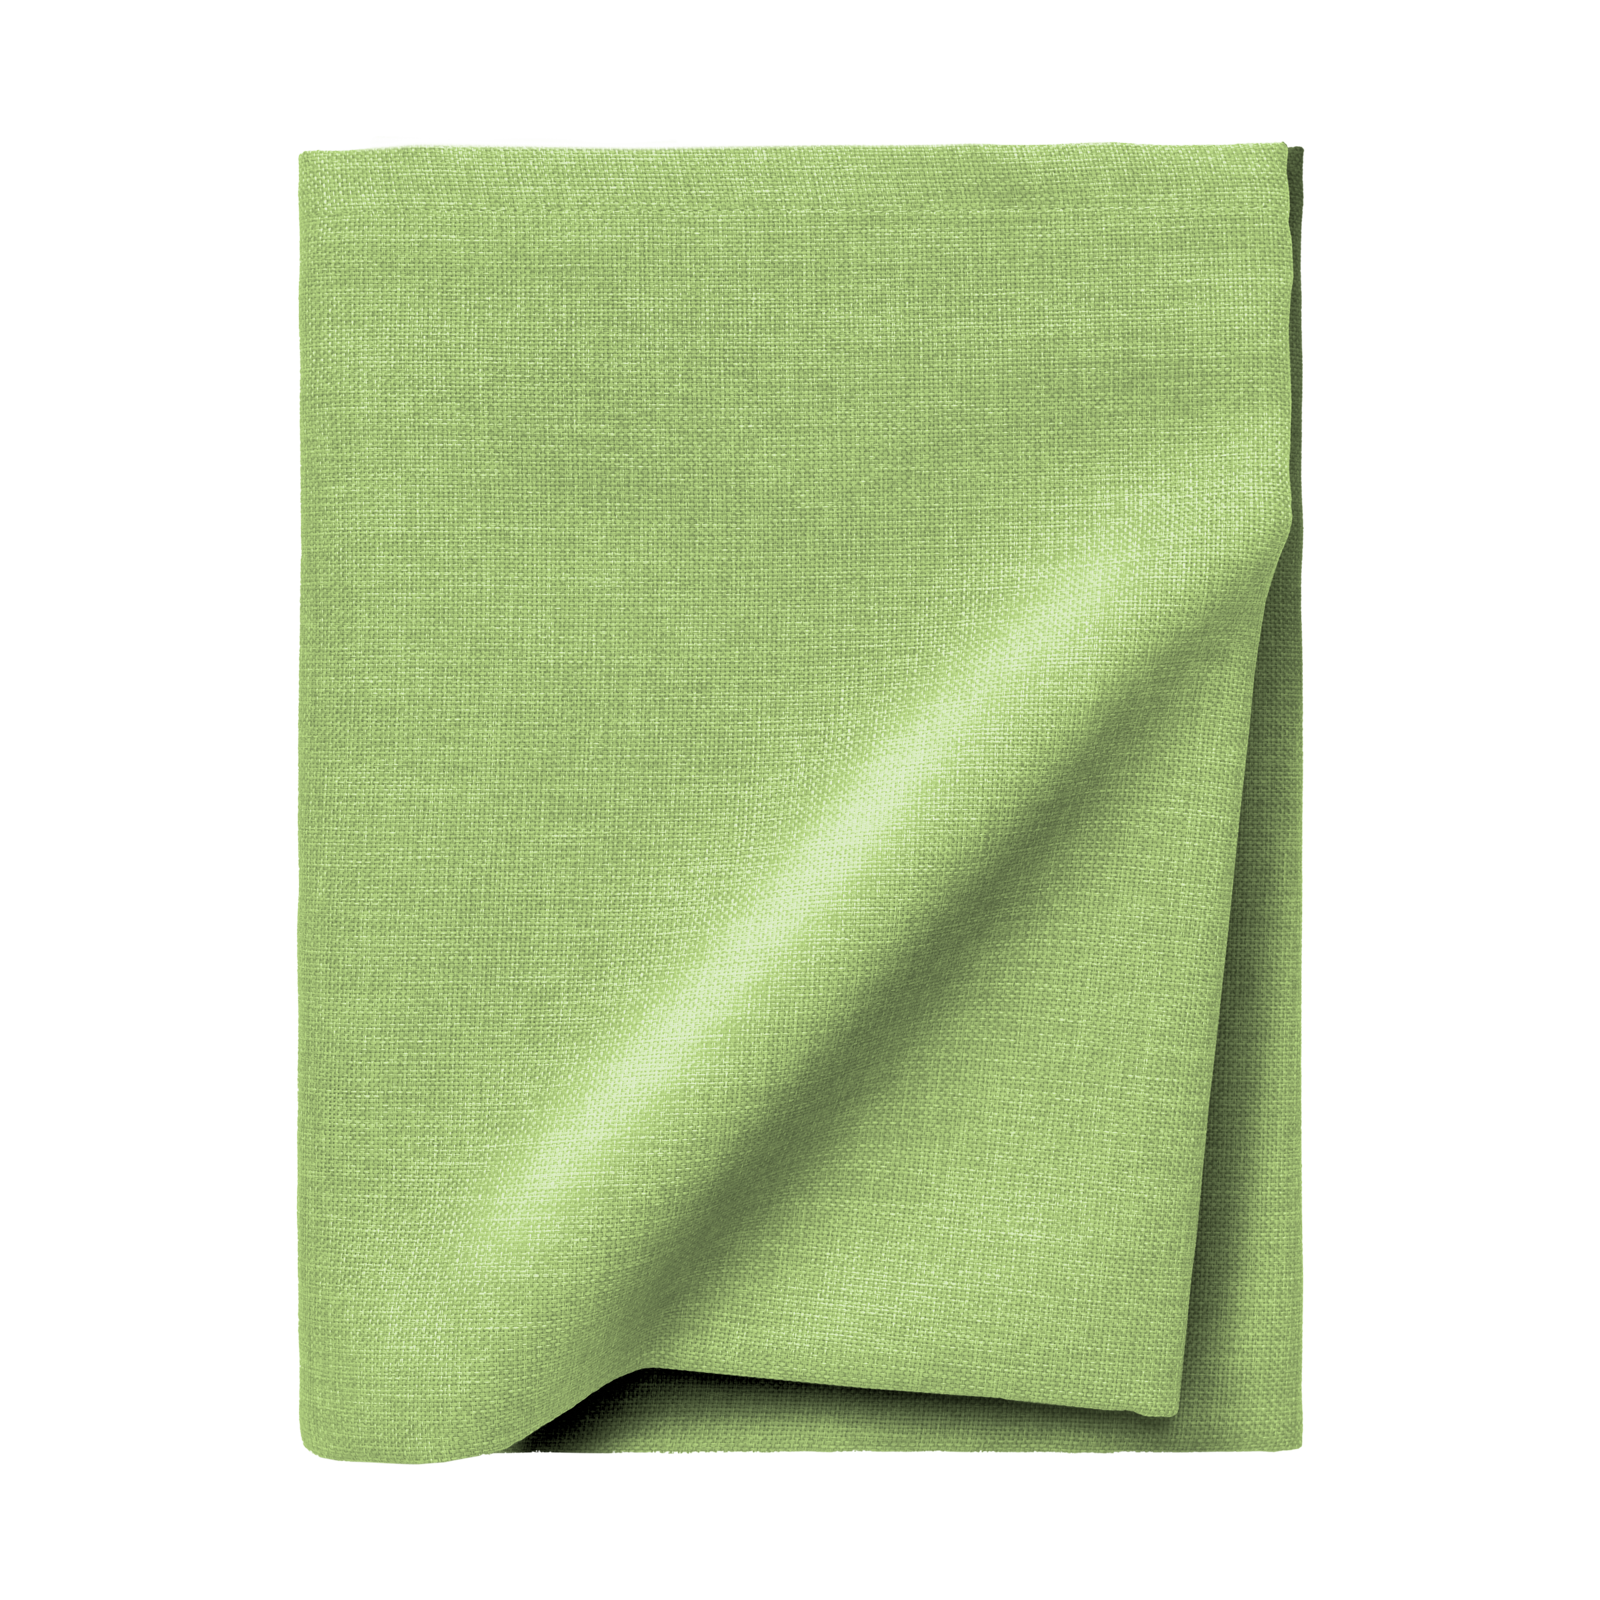 Größe: Ø170 cm Farbe: grasgrün #farbe_grasgrün